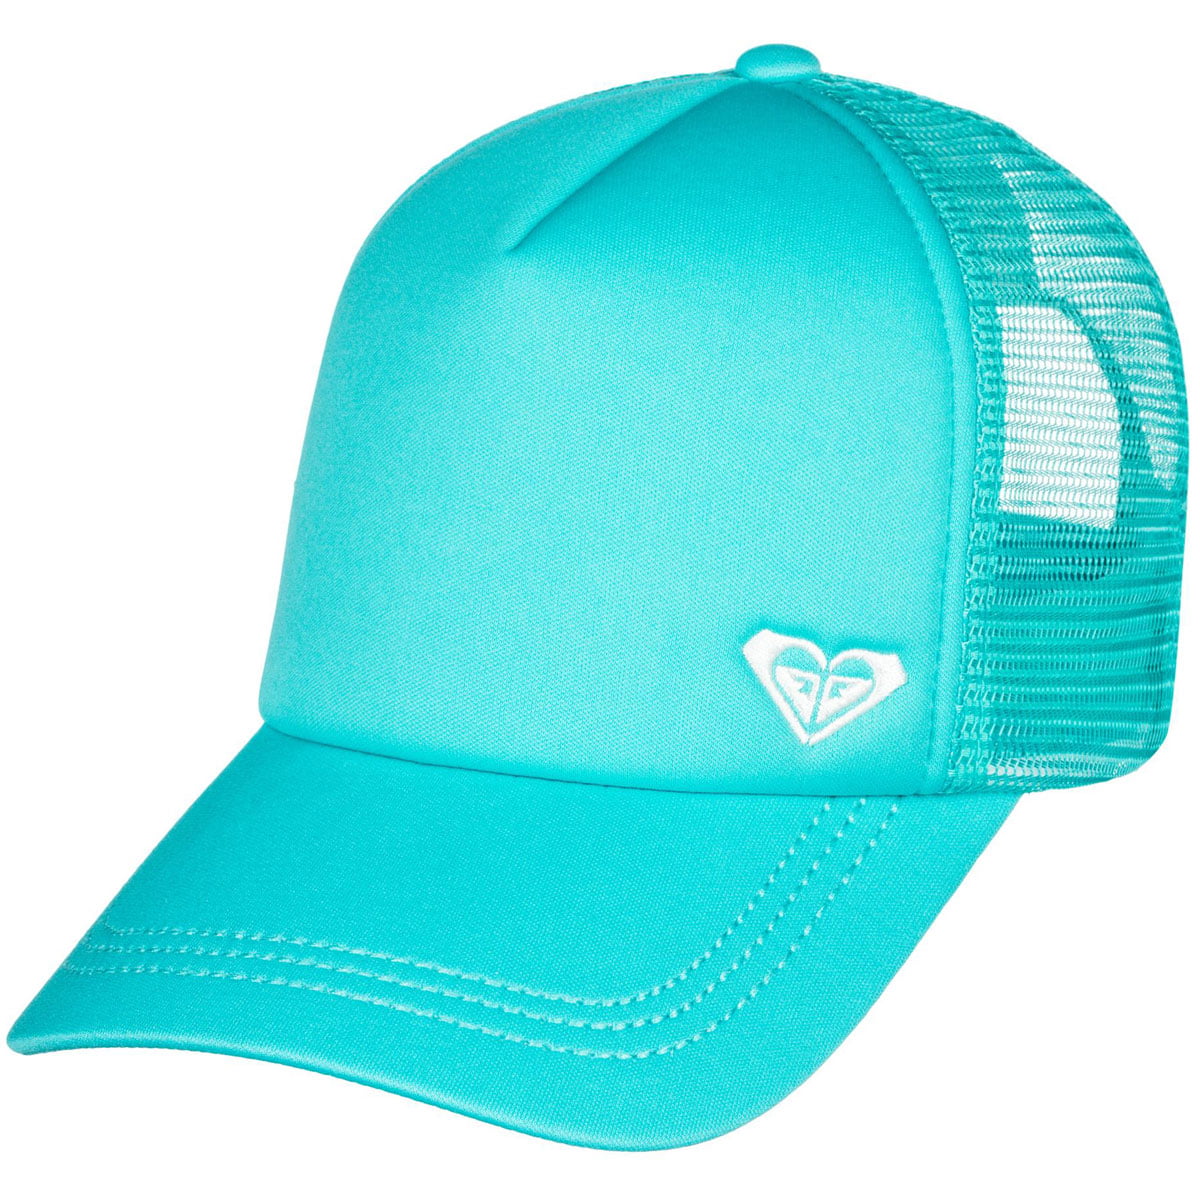 New Roxy Royal blue Trucker cap snapback Adjustable Women's Mesh Back hat OSFM